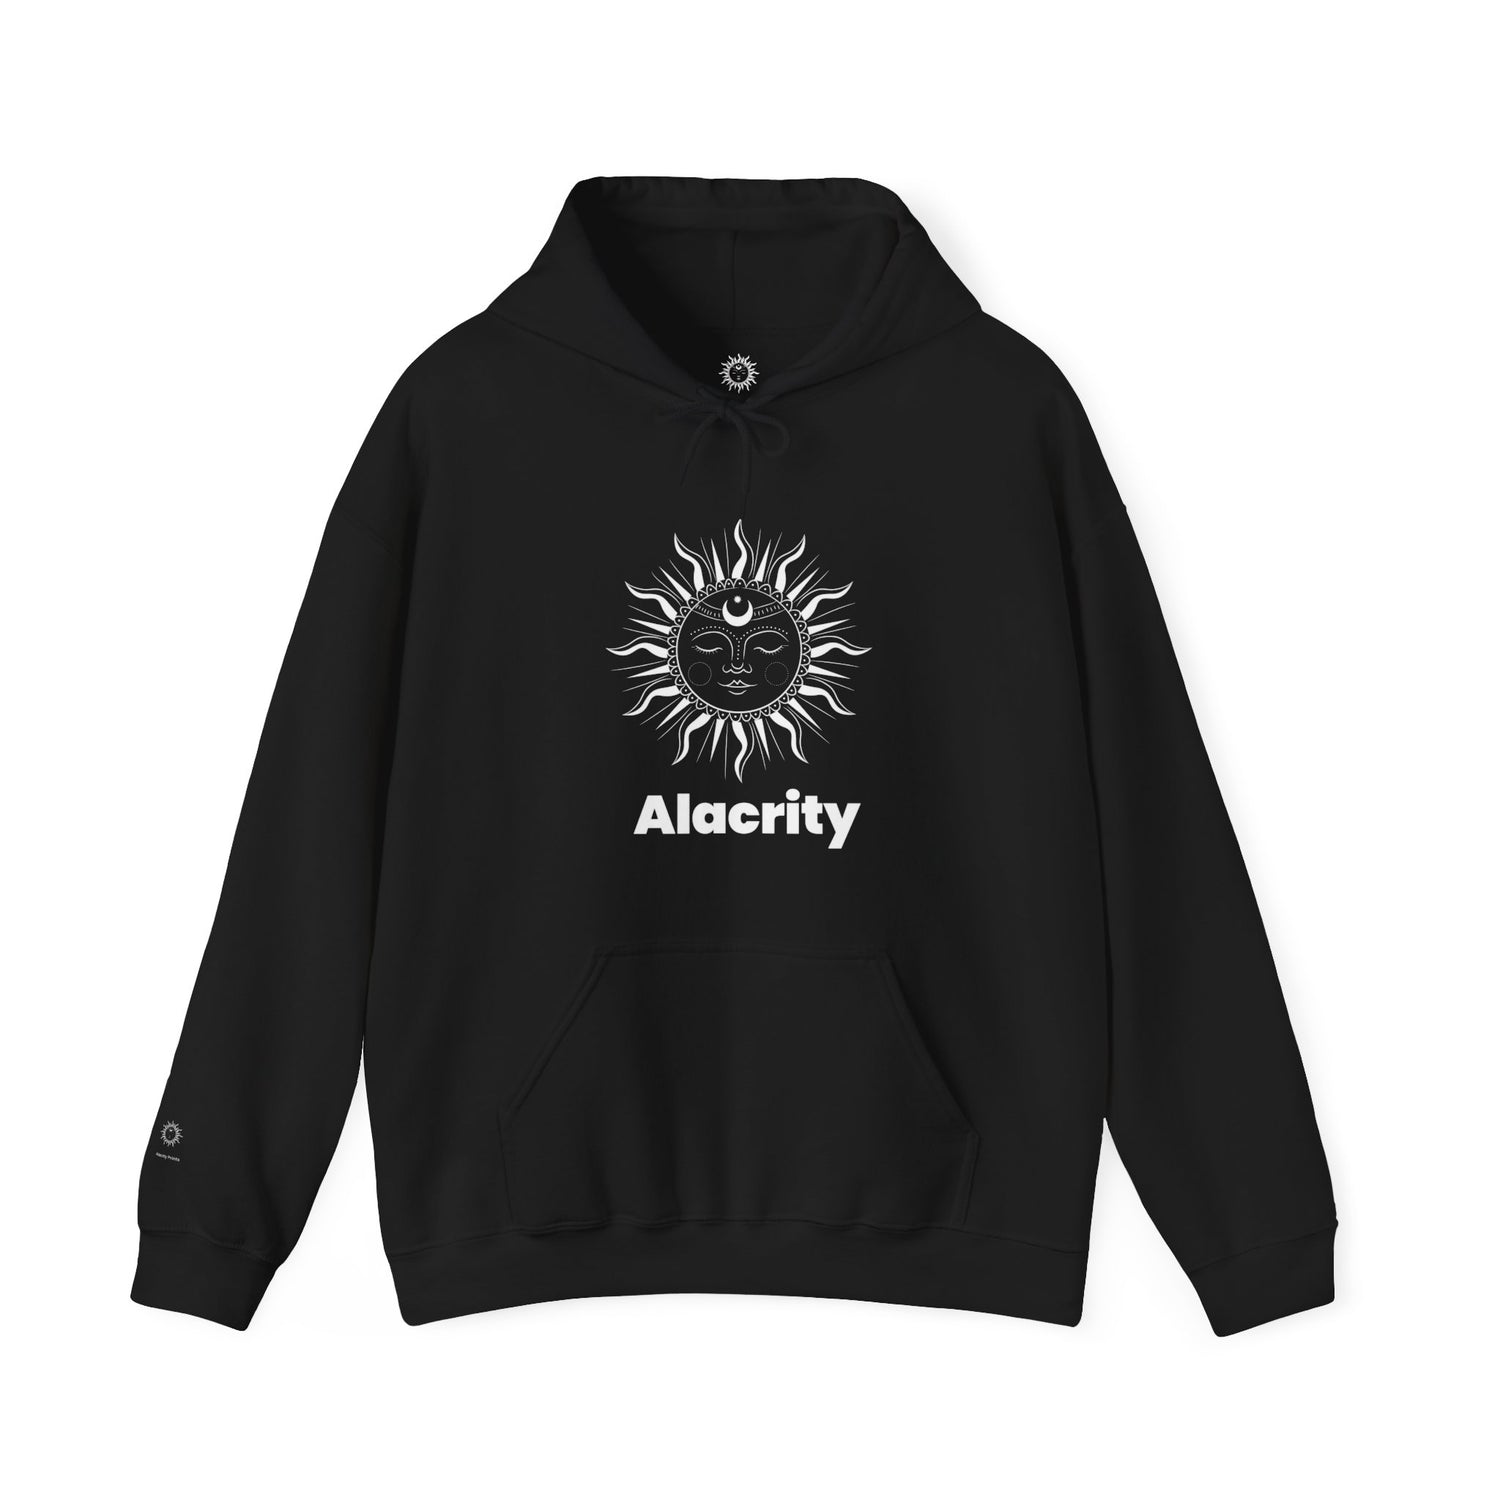 Alacrity Sun Designer Hoodie - Unisex Heavy Blend Sweatshirt with Alacrity Prints Logo, Cozy & Stylish - Black/Forest Green